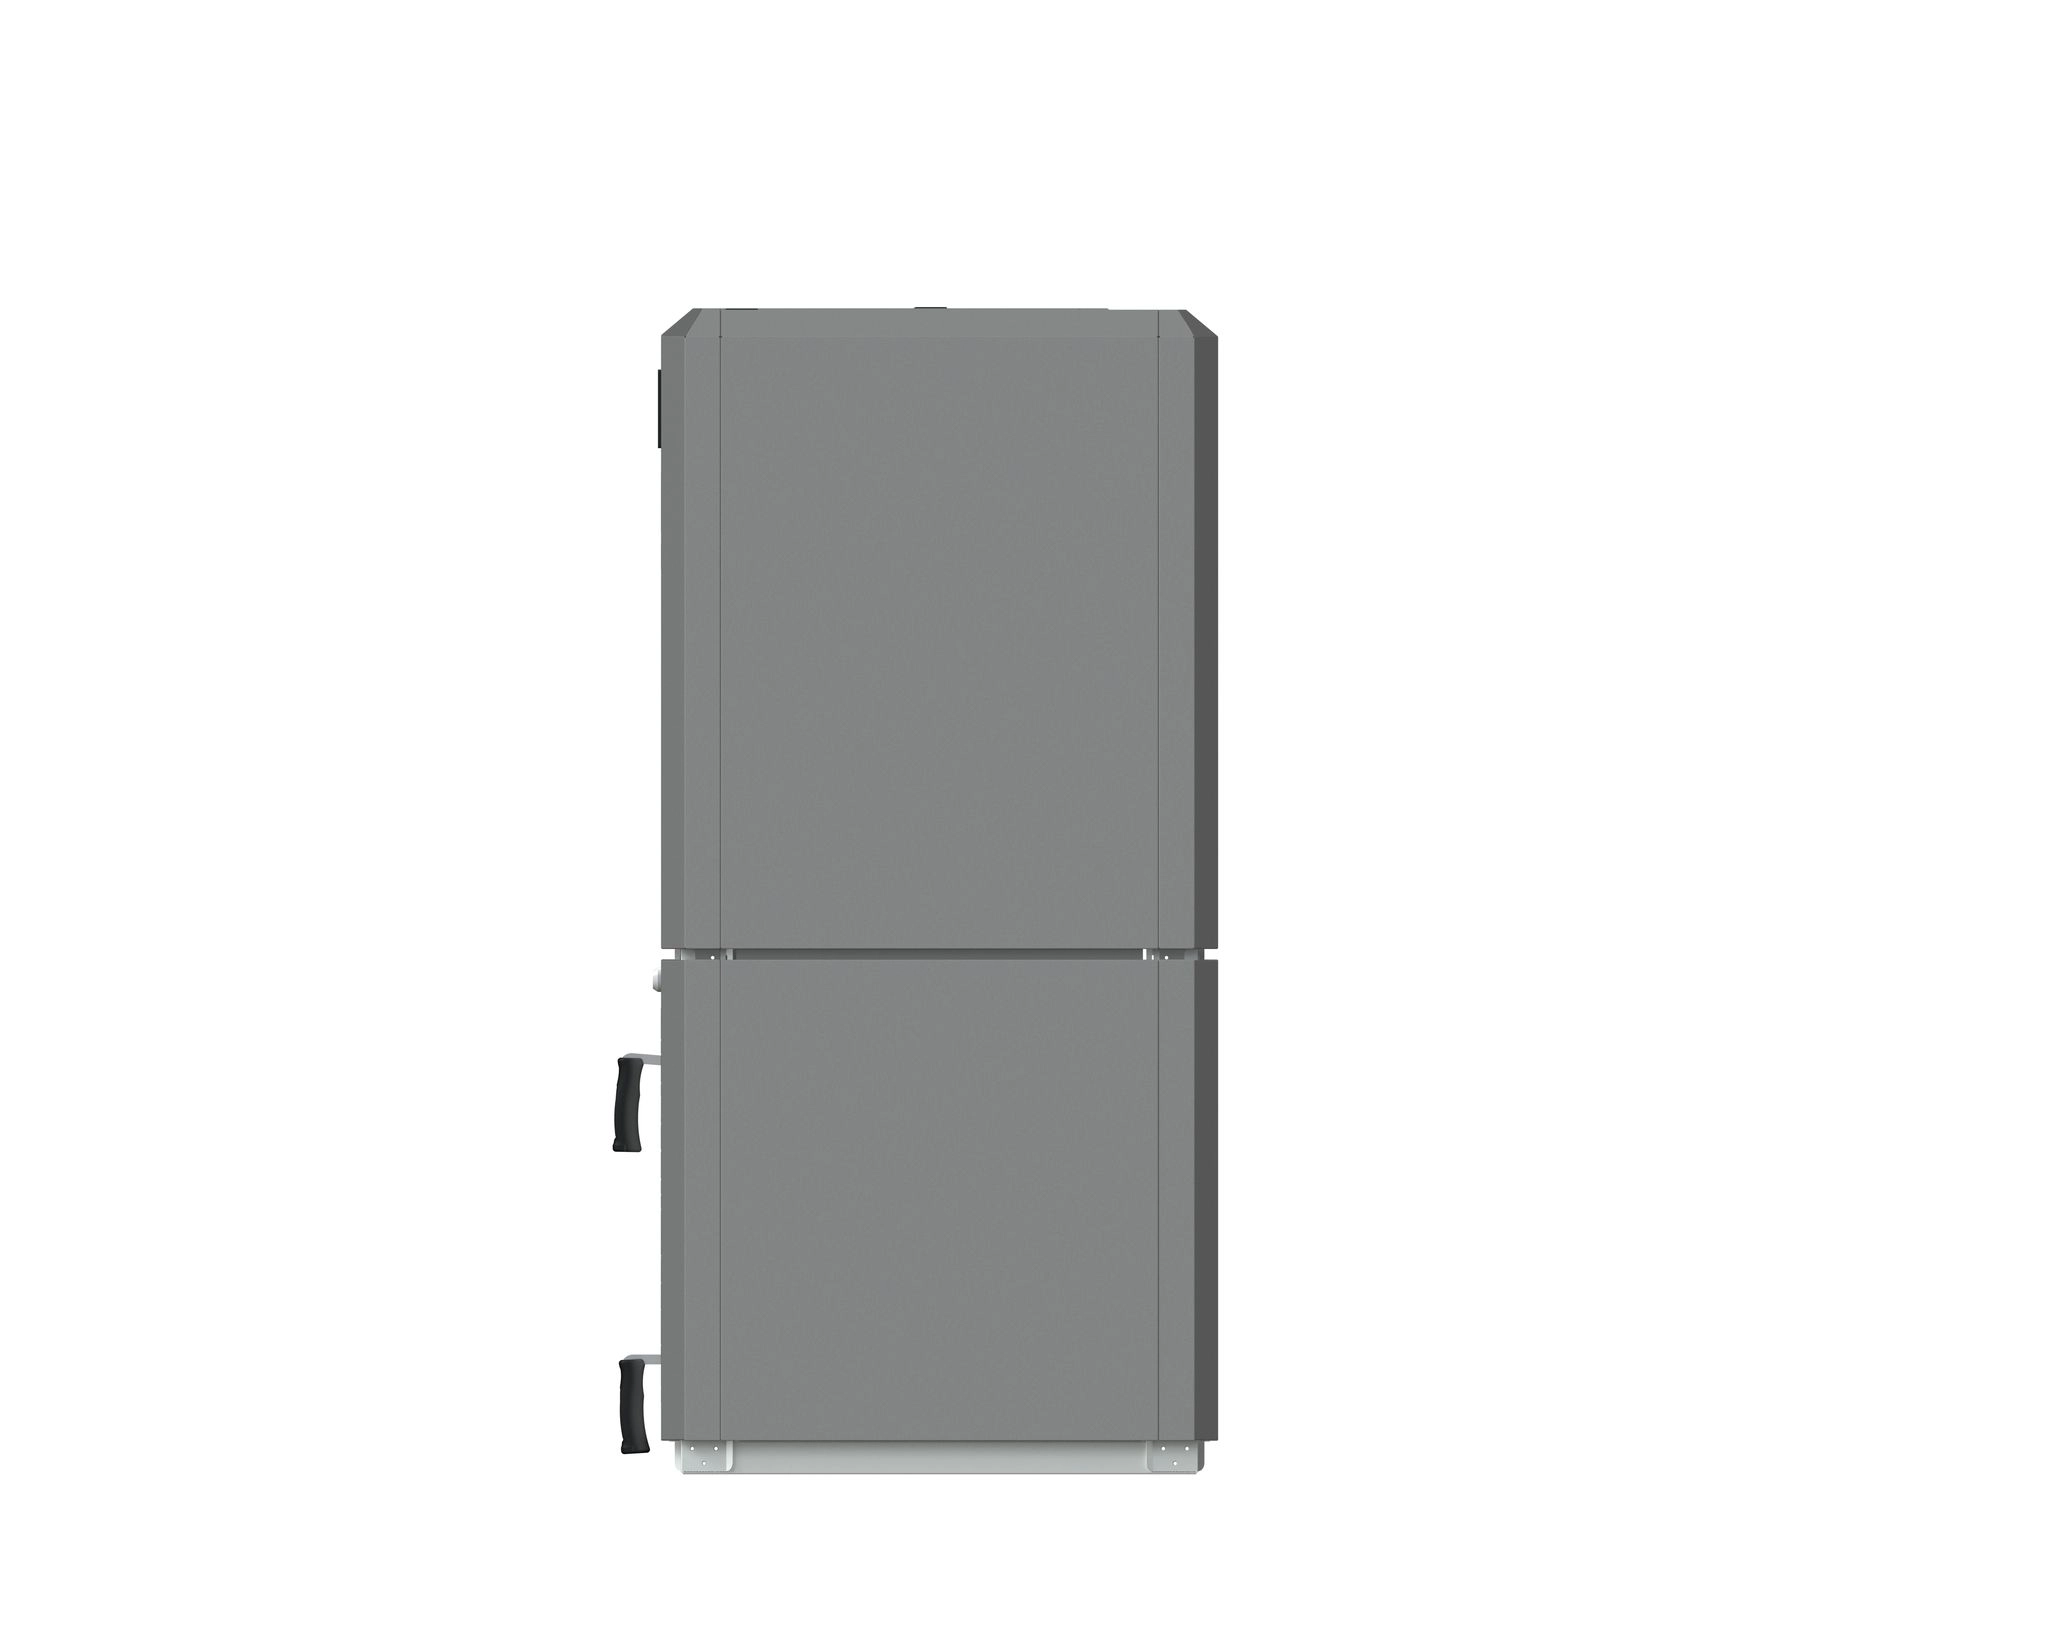 Твердотопливный котел Stalmark Eko Silver II 24кВт + Вентилятор